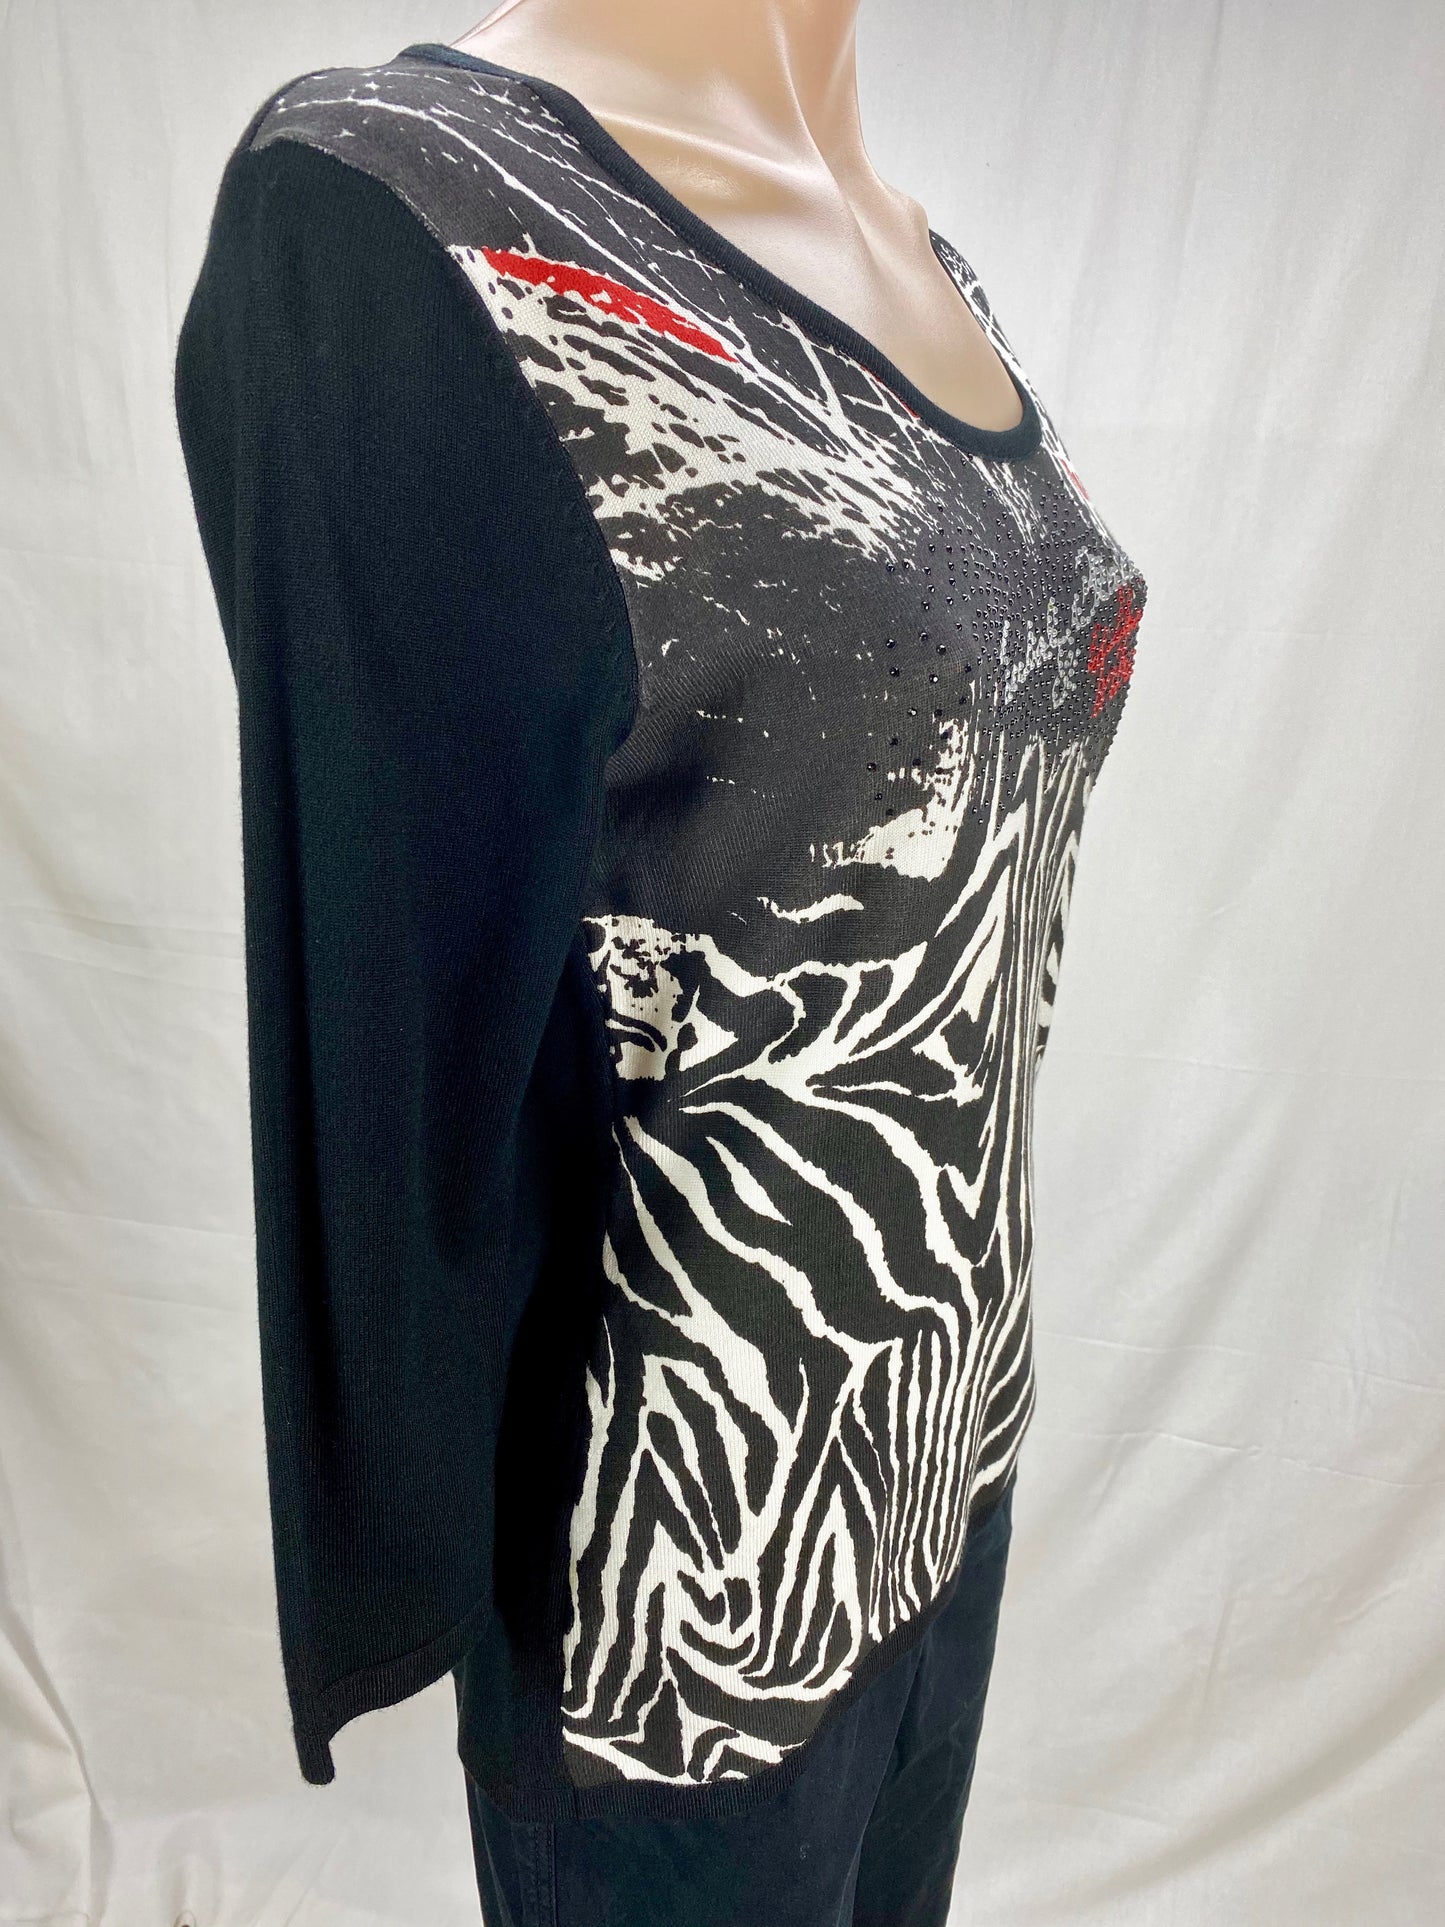 Zebra Print Knit Top  - Black